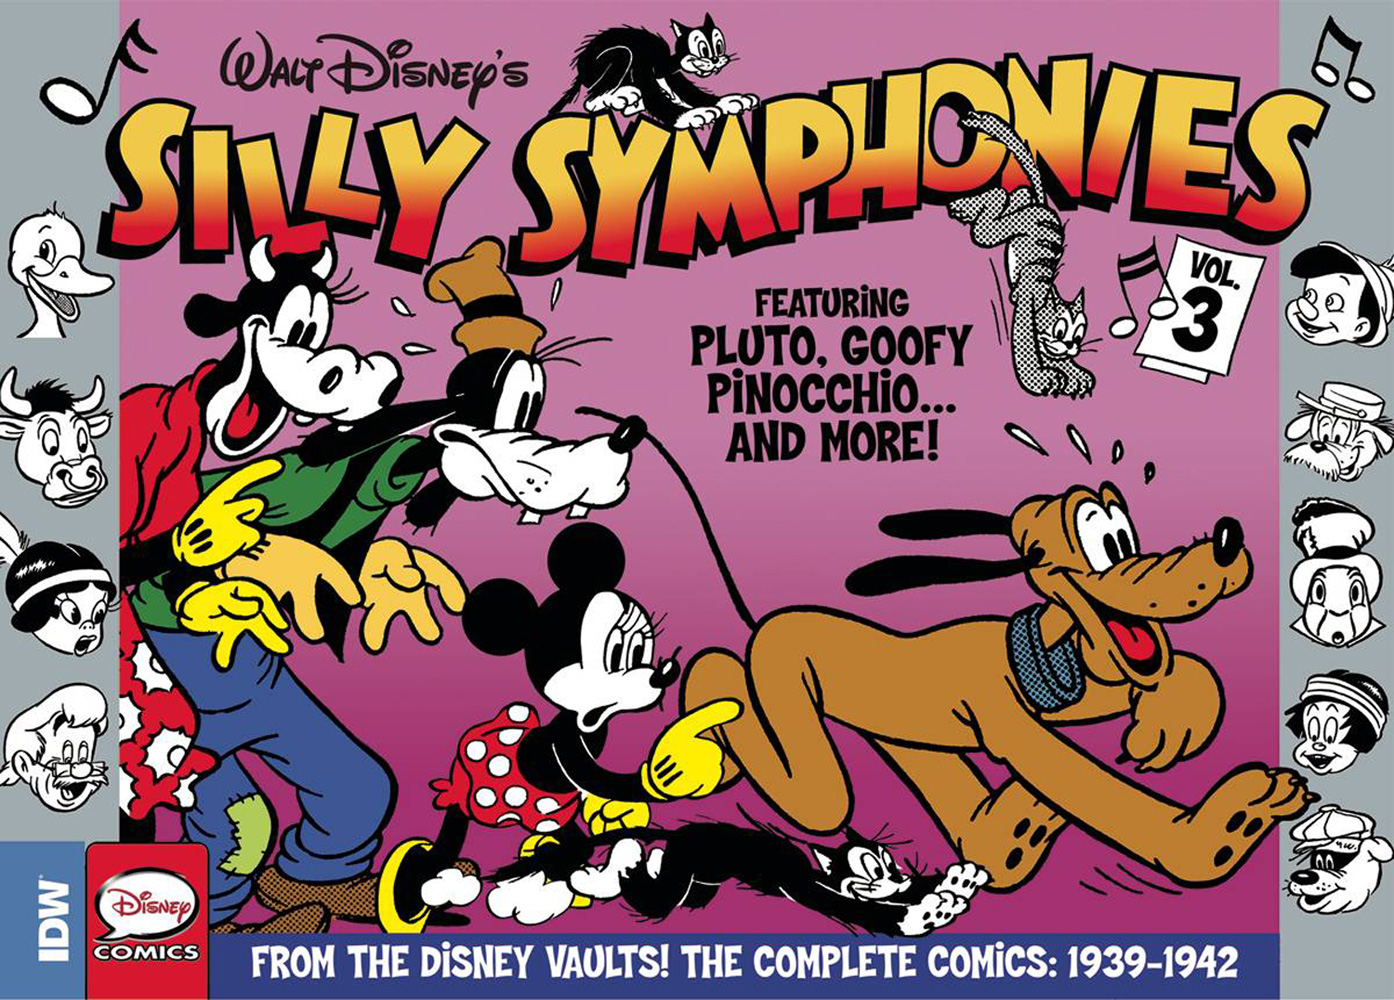 Walt Disney’s Silly Symphonies: The Sunday Newspaper Comics Vol. 3